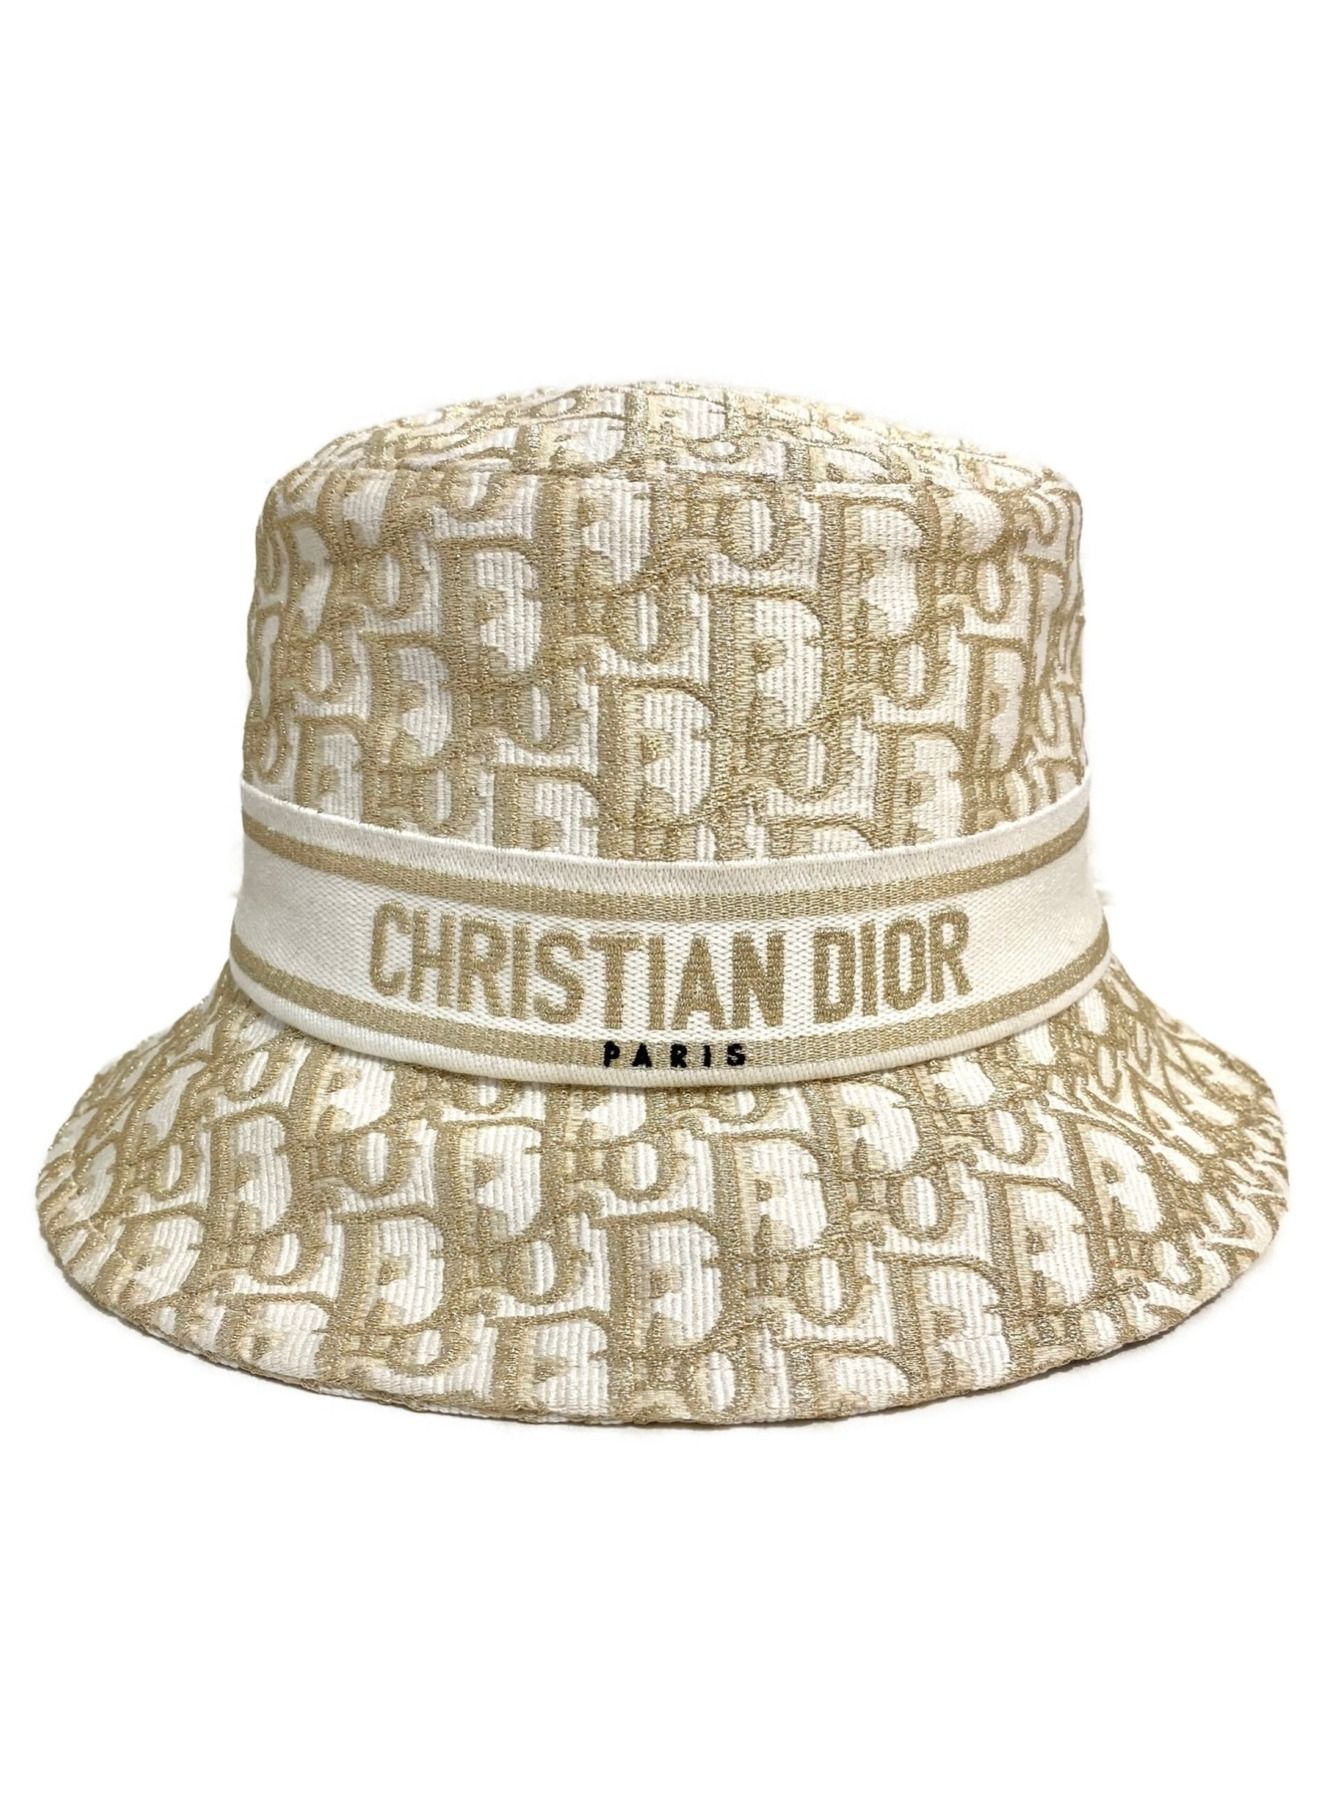 Christian Dior (クリスチャン ディオール) オブリークバケットハット ベージュ サイズ:58cm